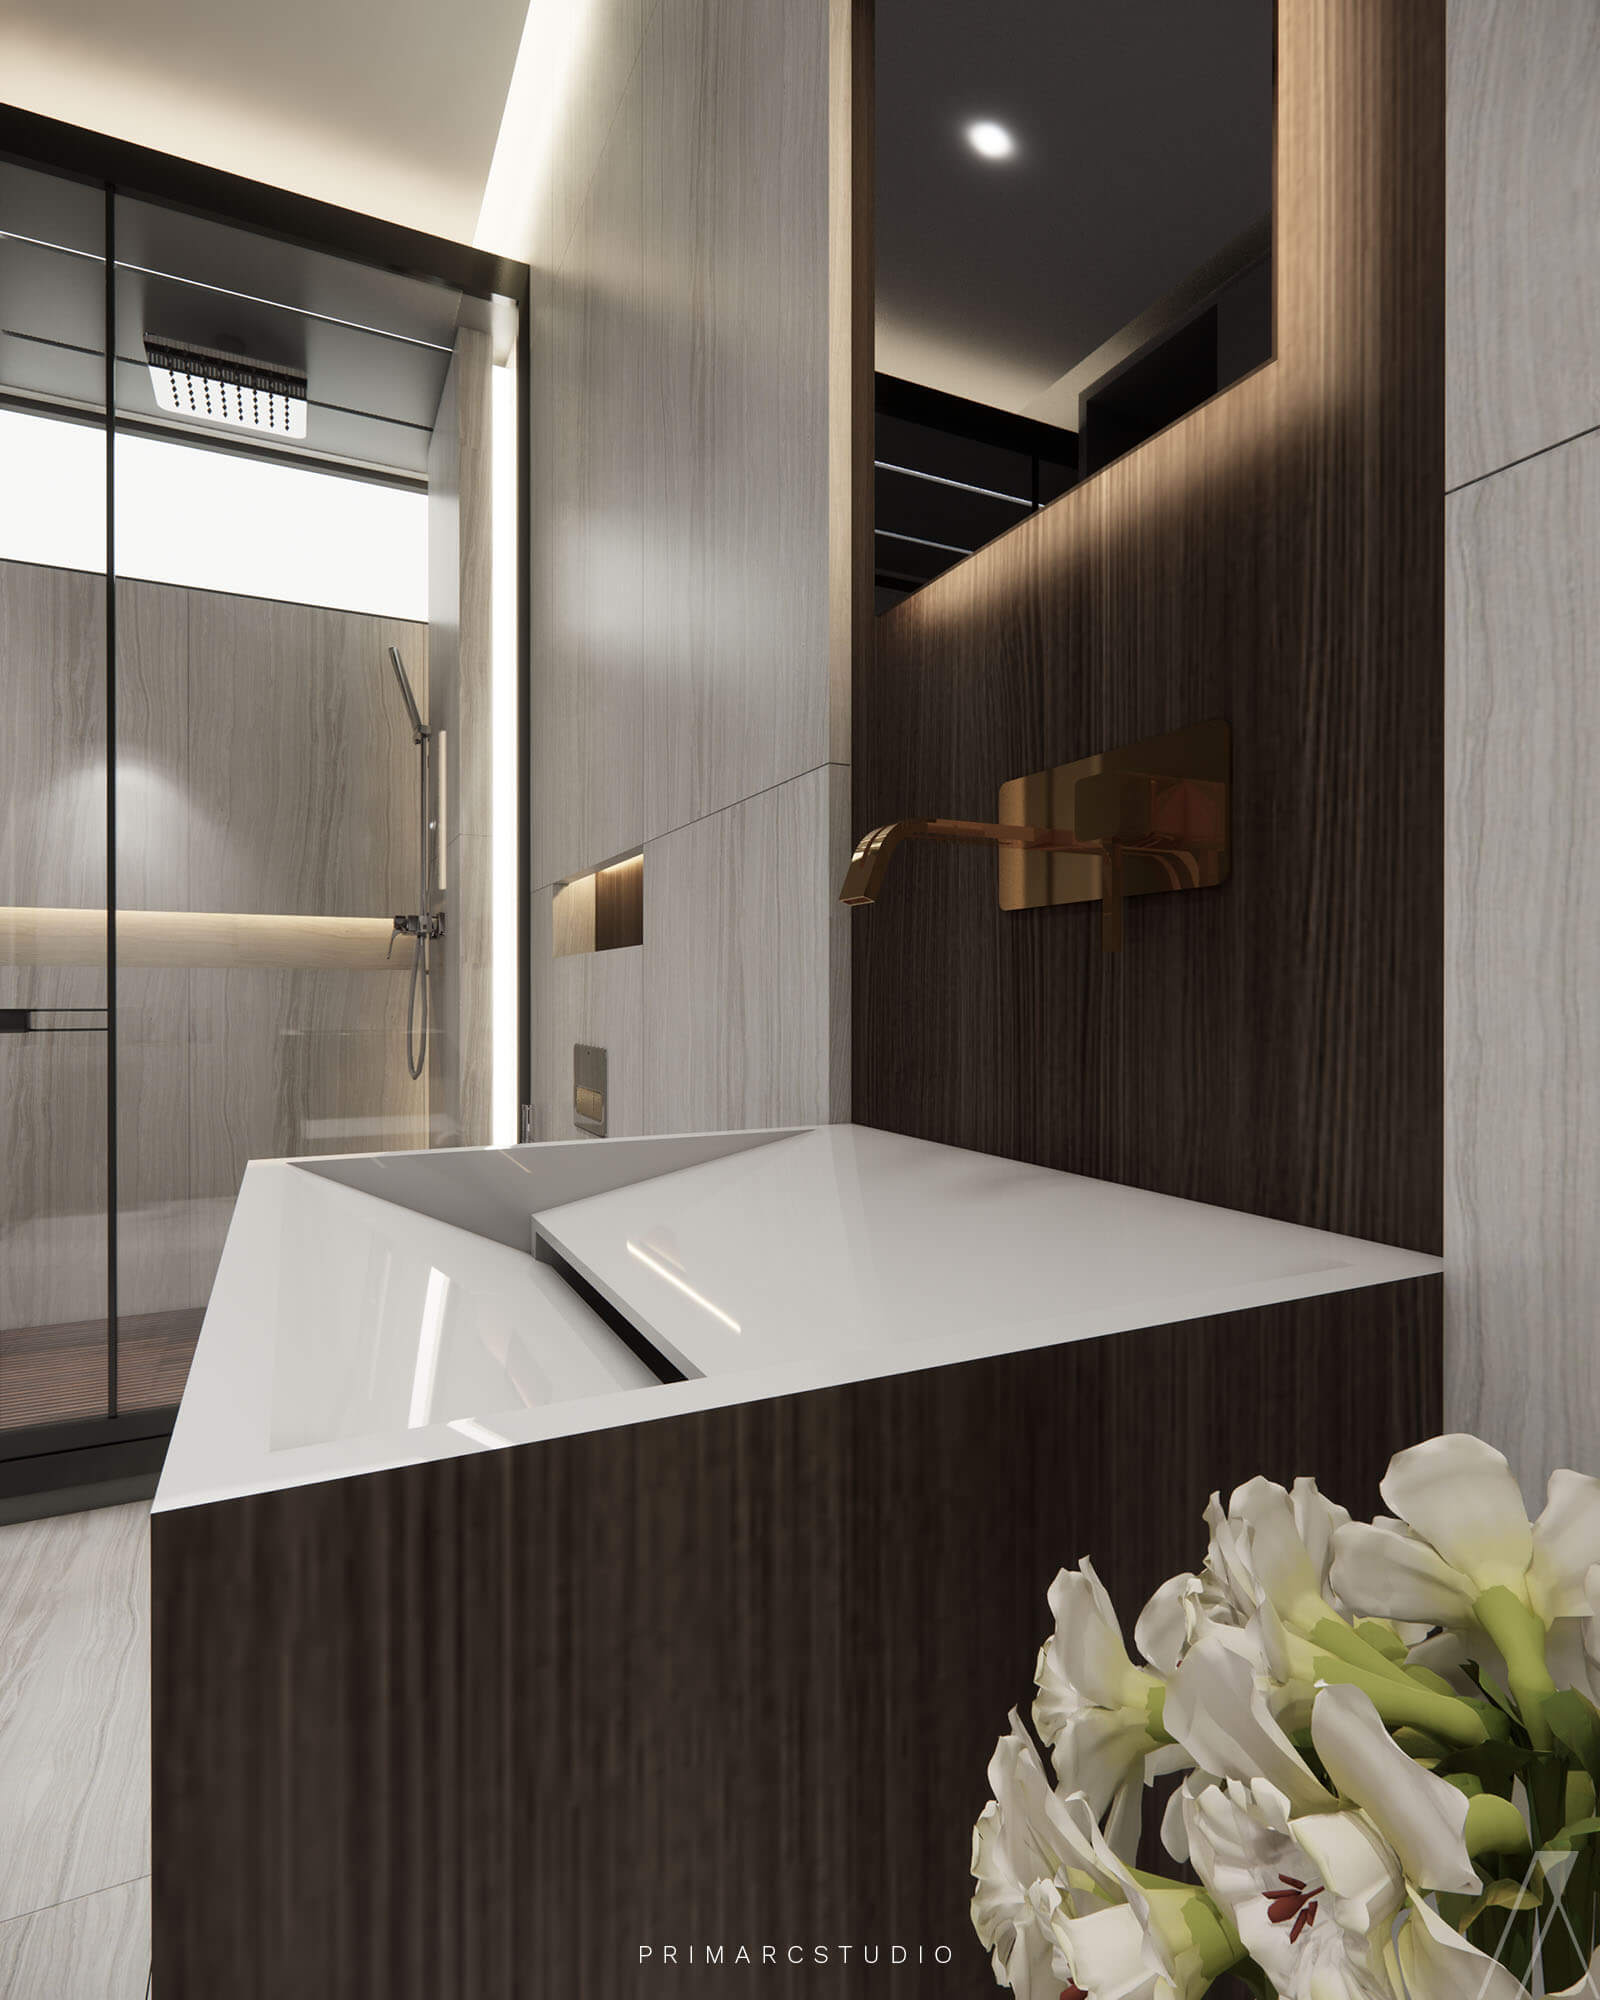 Washroom interior design in neutral colors - Sink detail